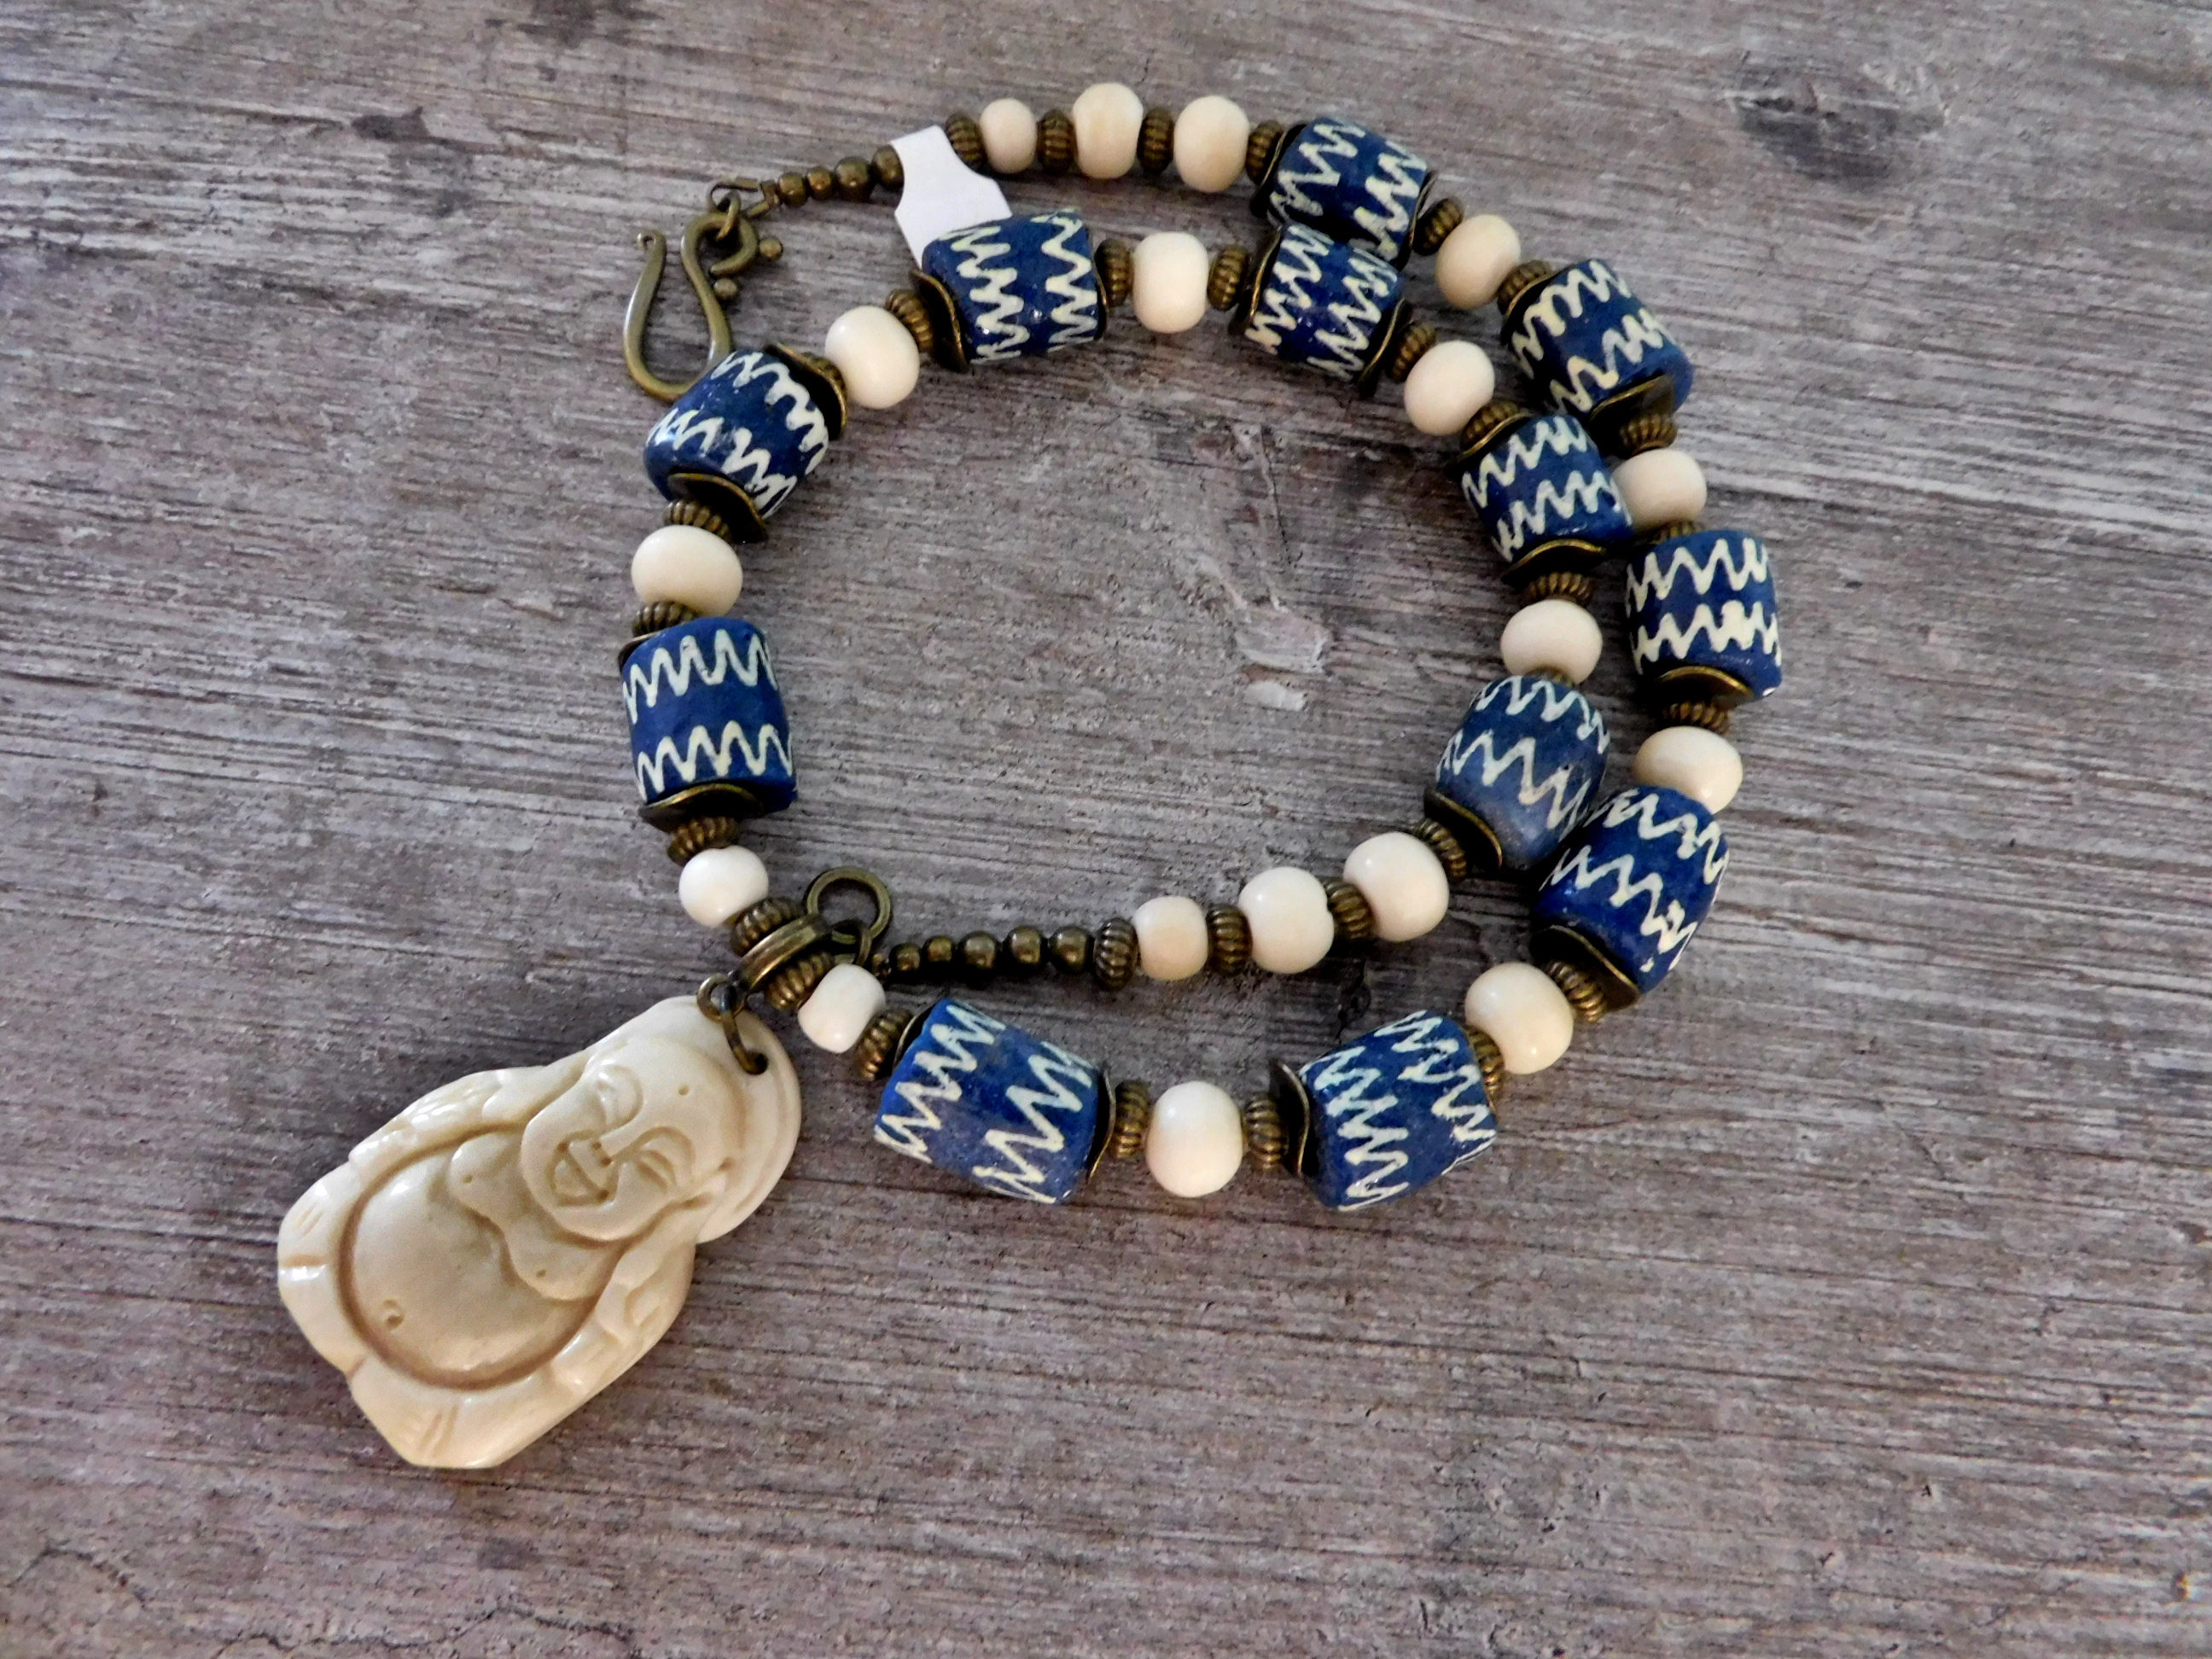 Buddha-necklace with powderglass beads and bone